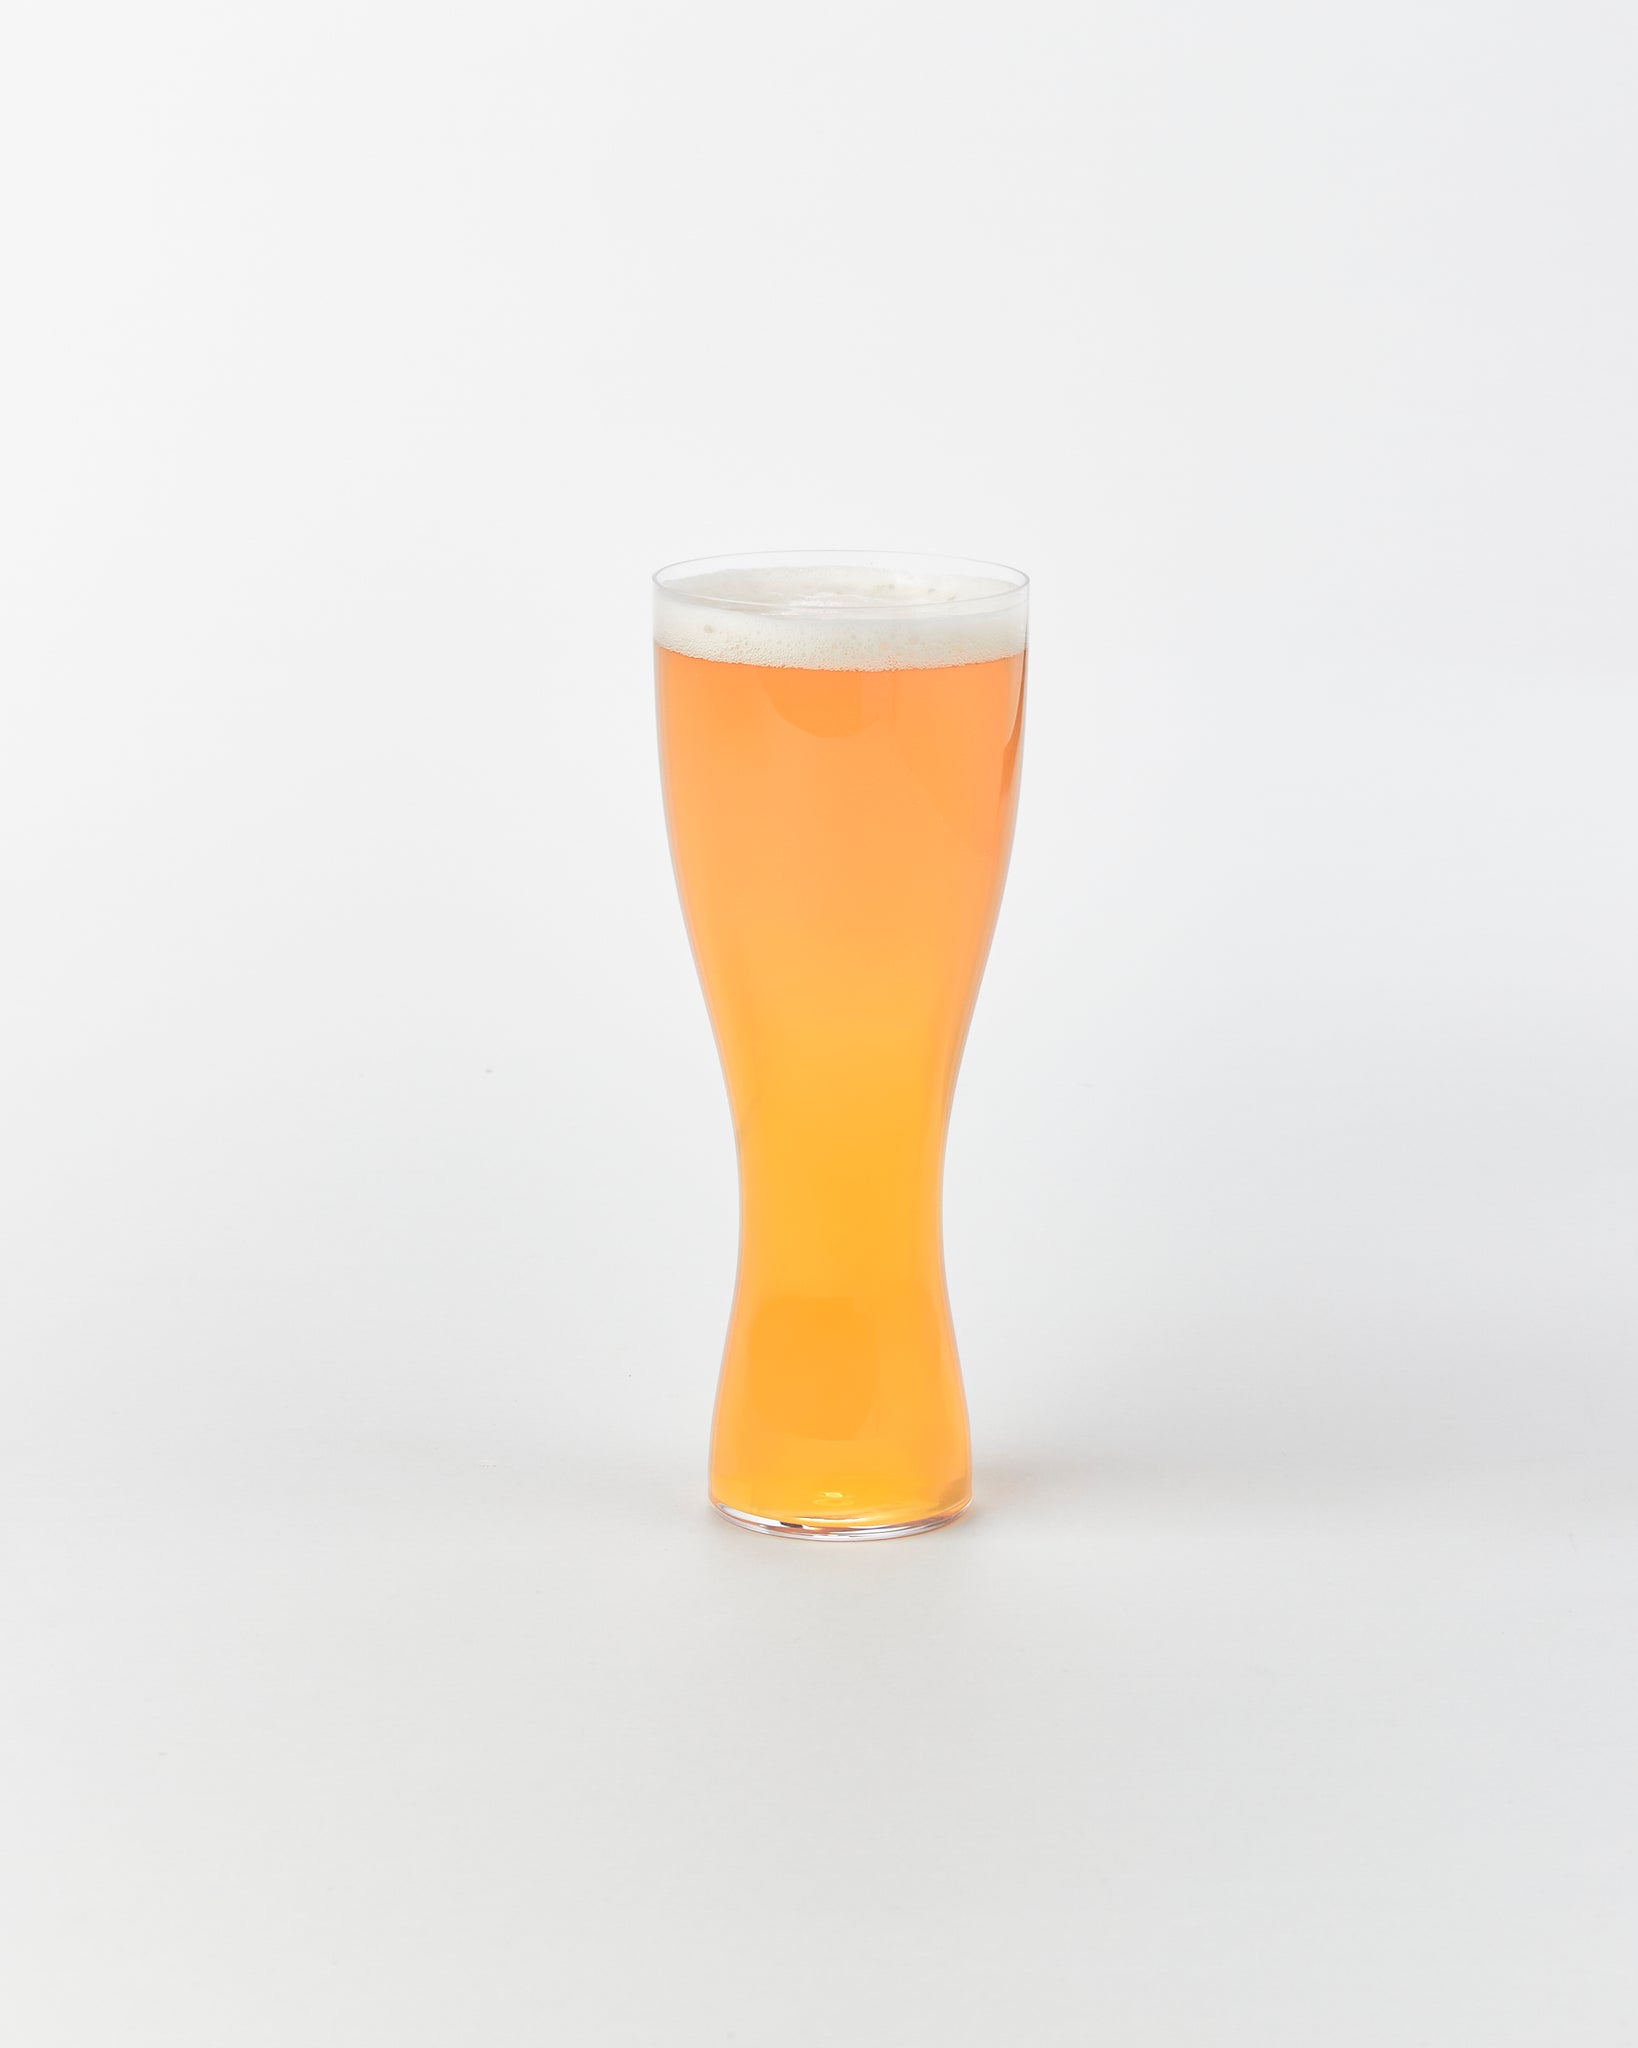 Usuhari “TSUDUMI” Beer Glass - Set of 2 with wooden box